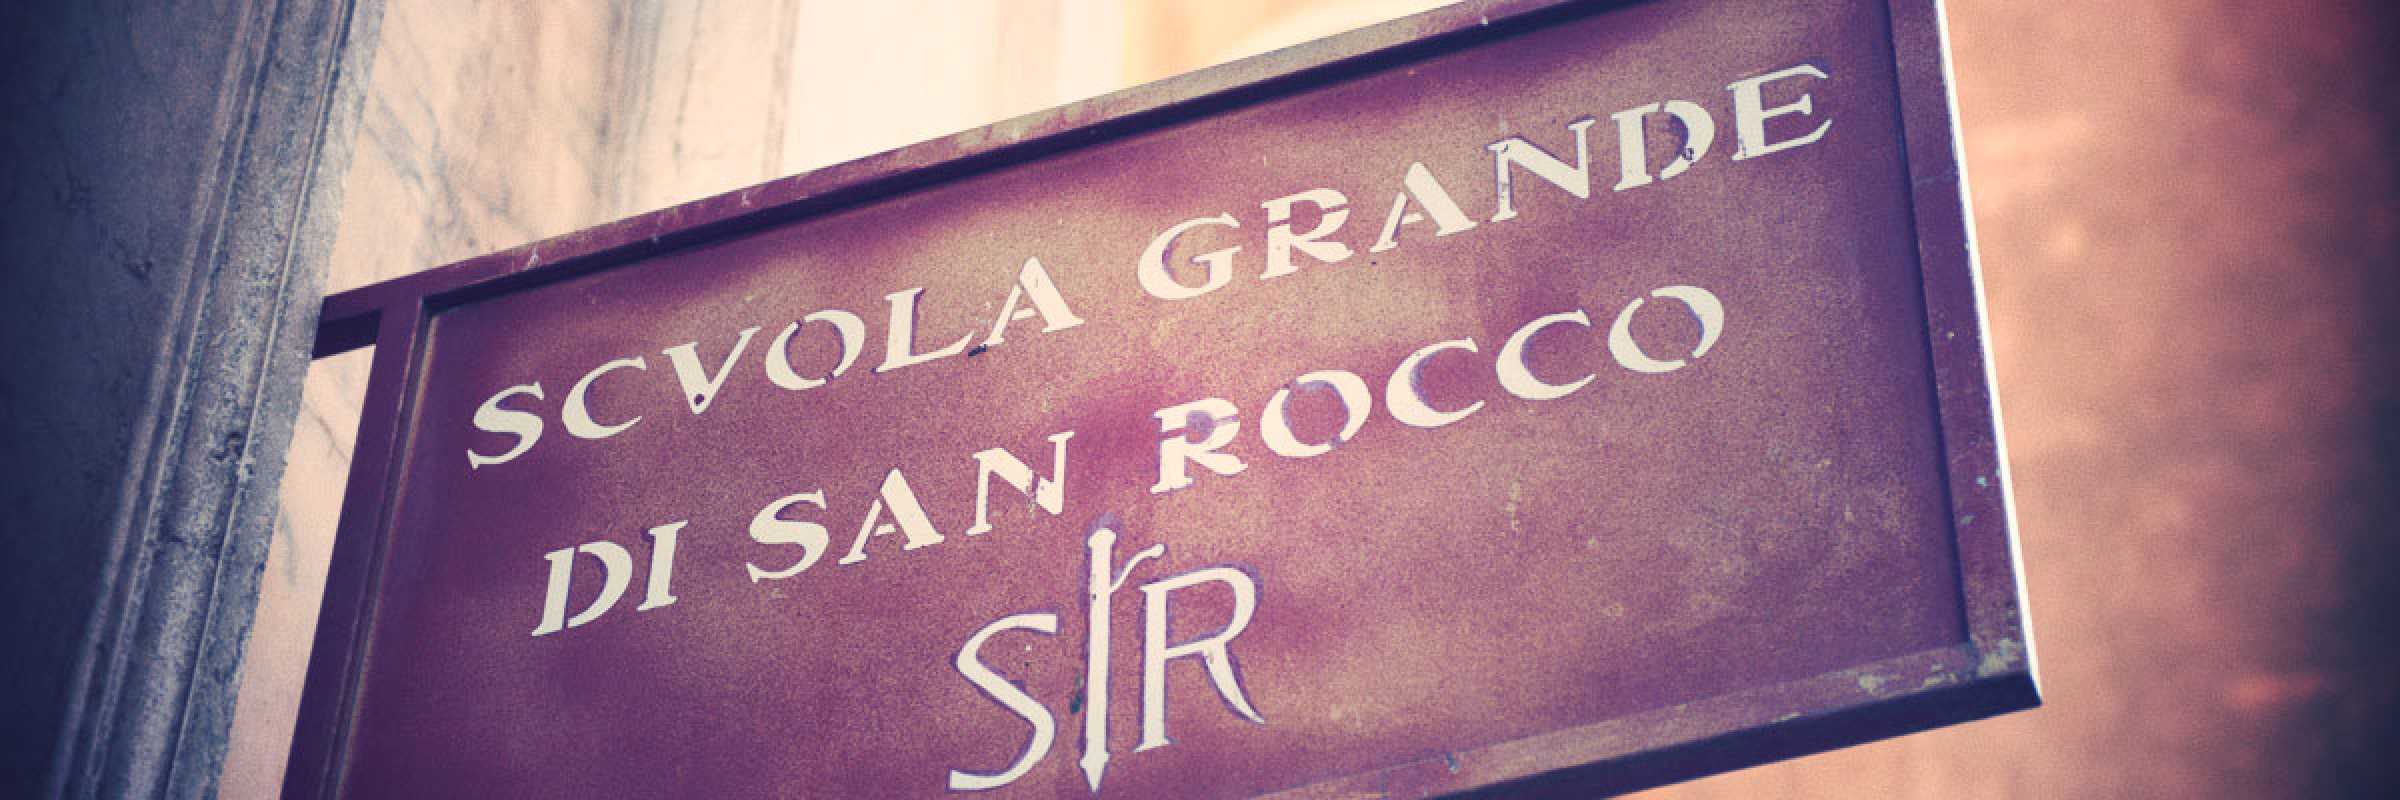 The sign of the Scuola Grande of San Rocco